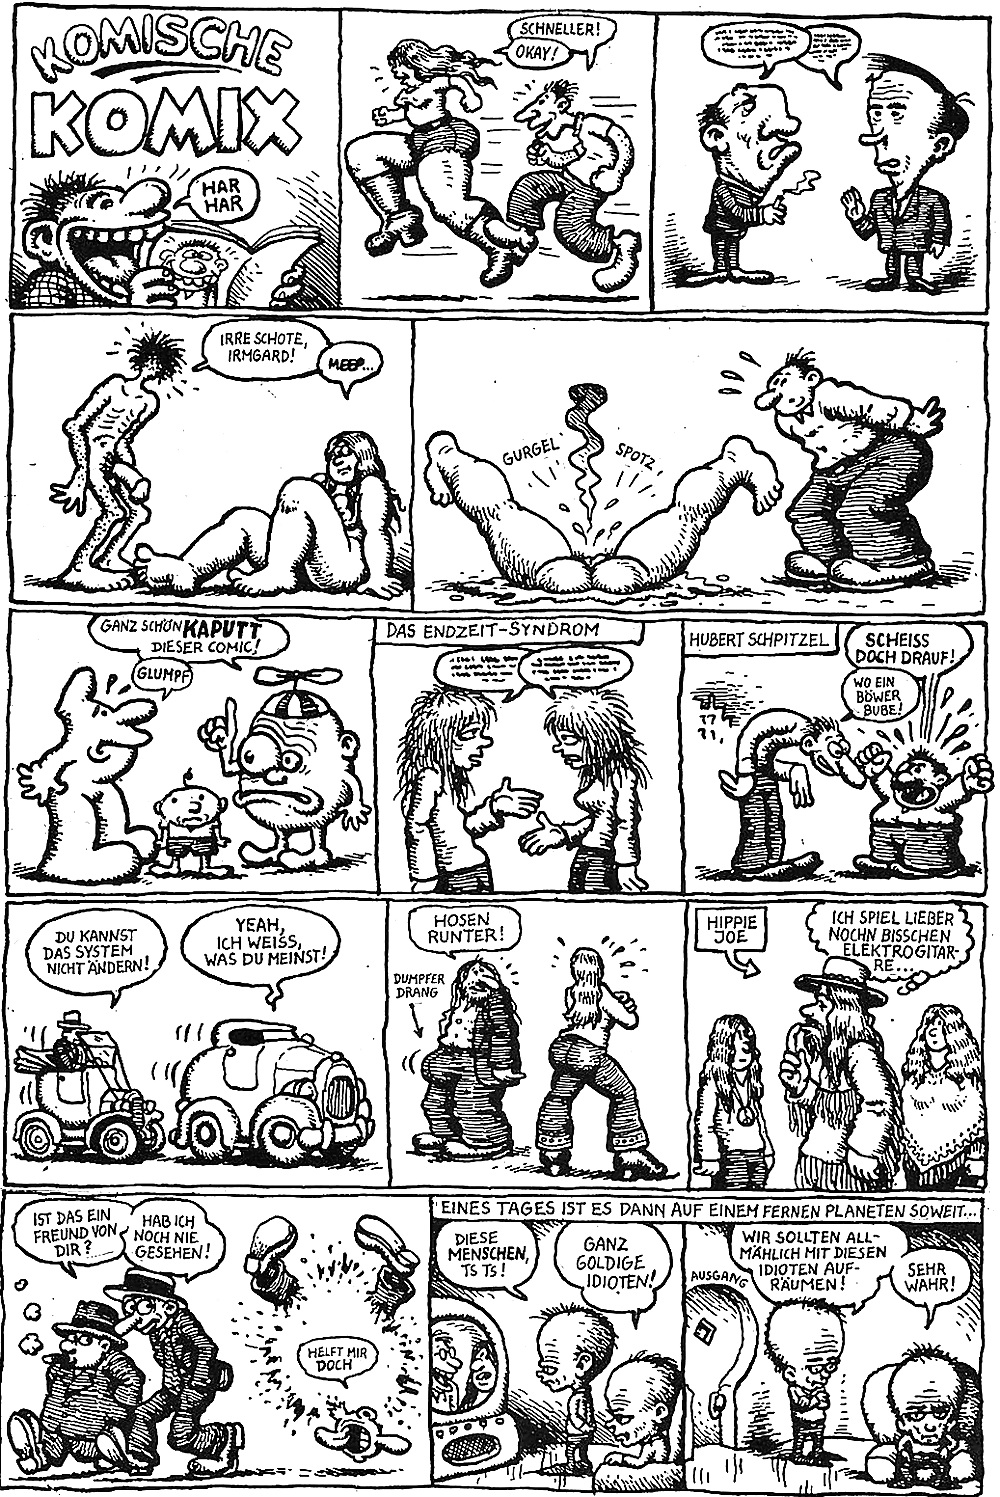 R.c. komische  comics by jedman #16732386